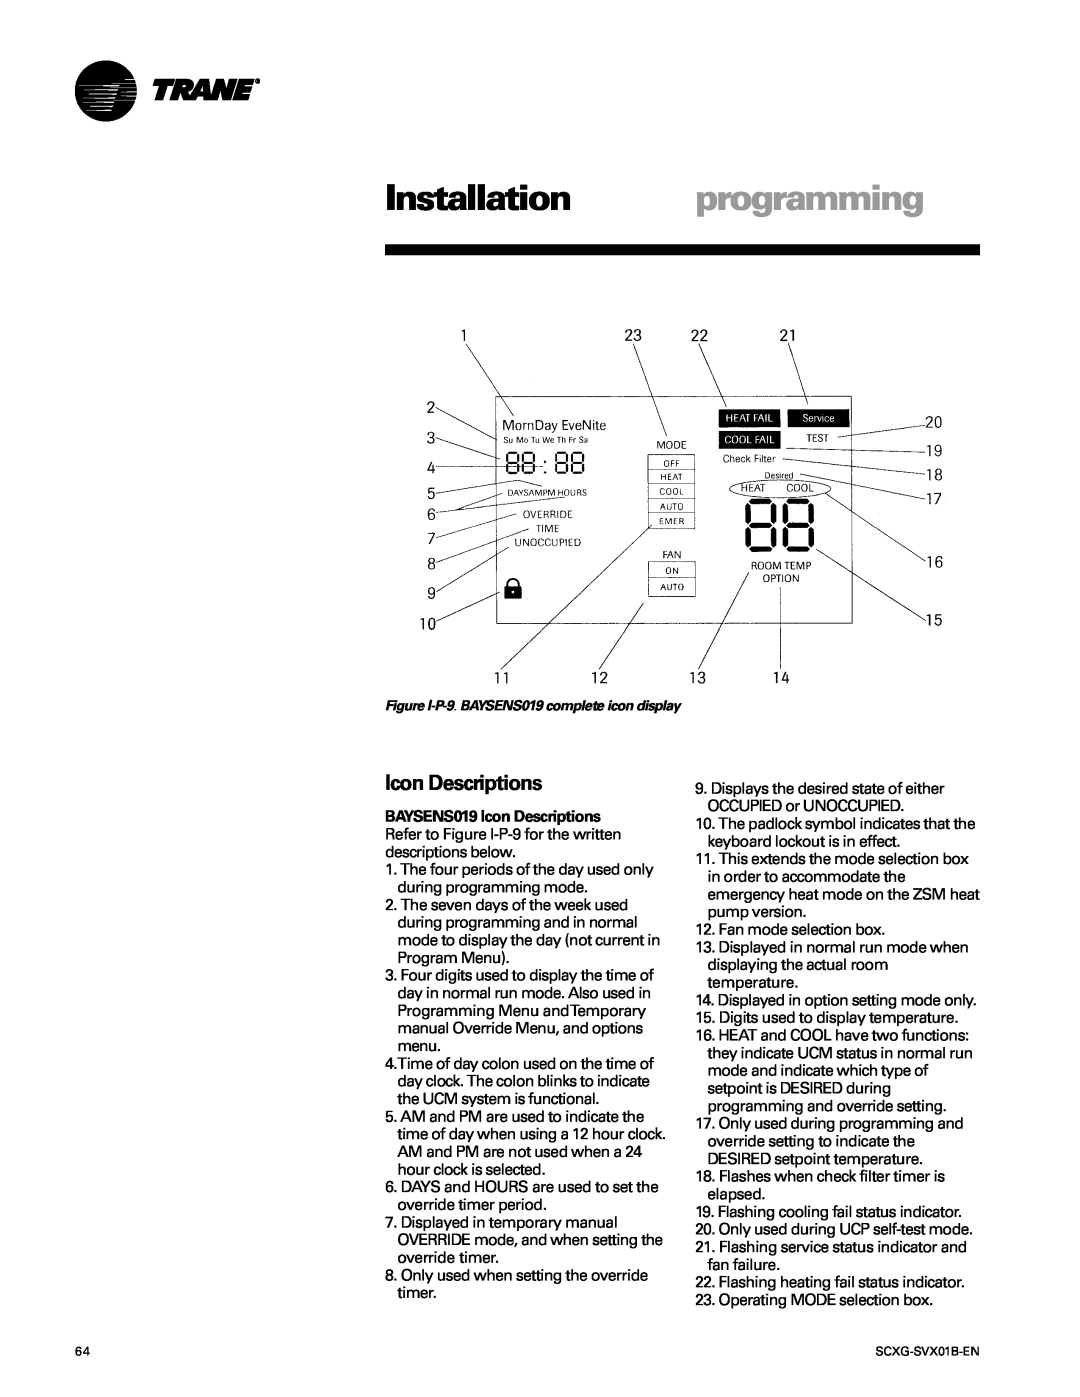 Trane SCXG-SVX01B-EN manual Icon Descriptions, Installation programming 